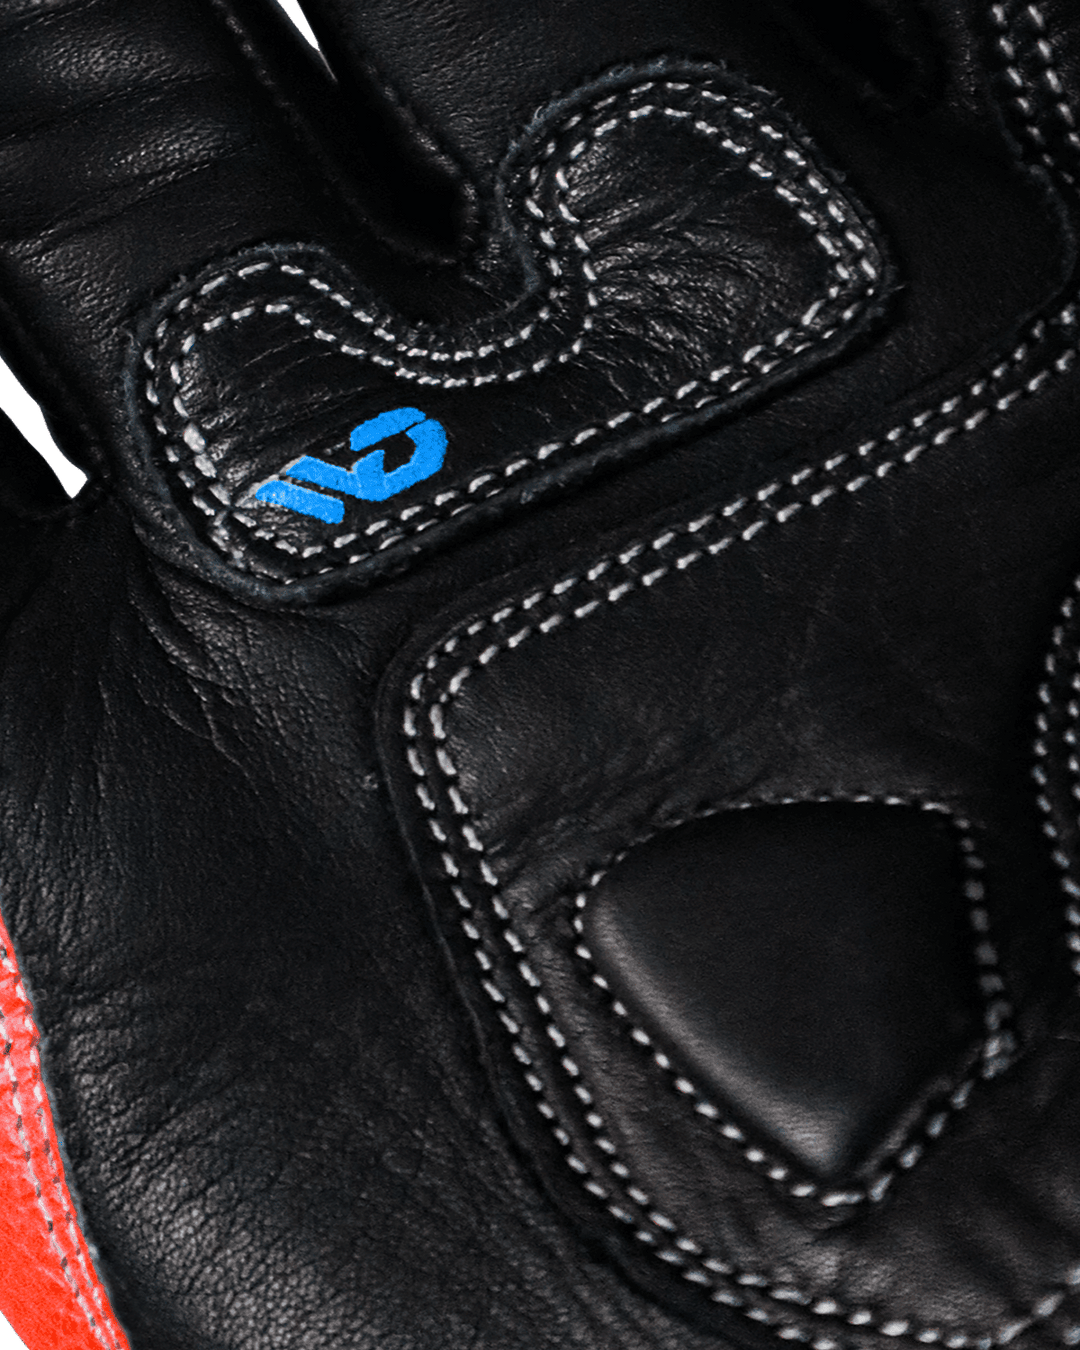 Torque GT Motorcycle Gloves